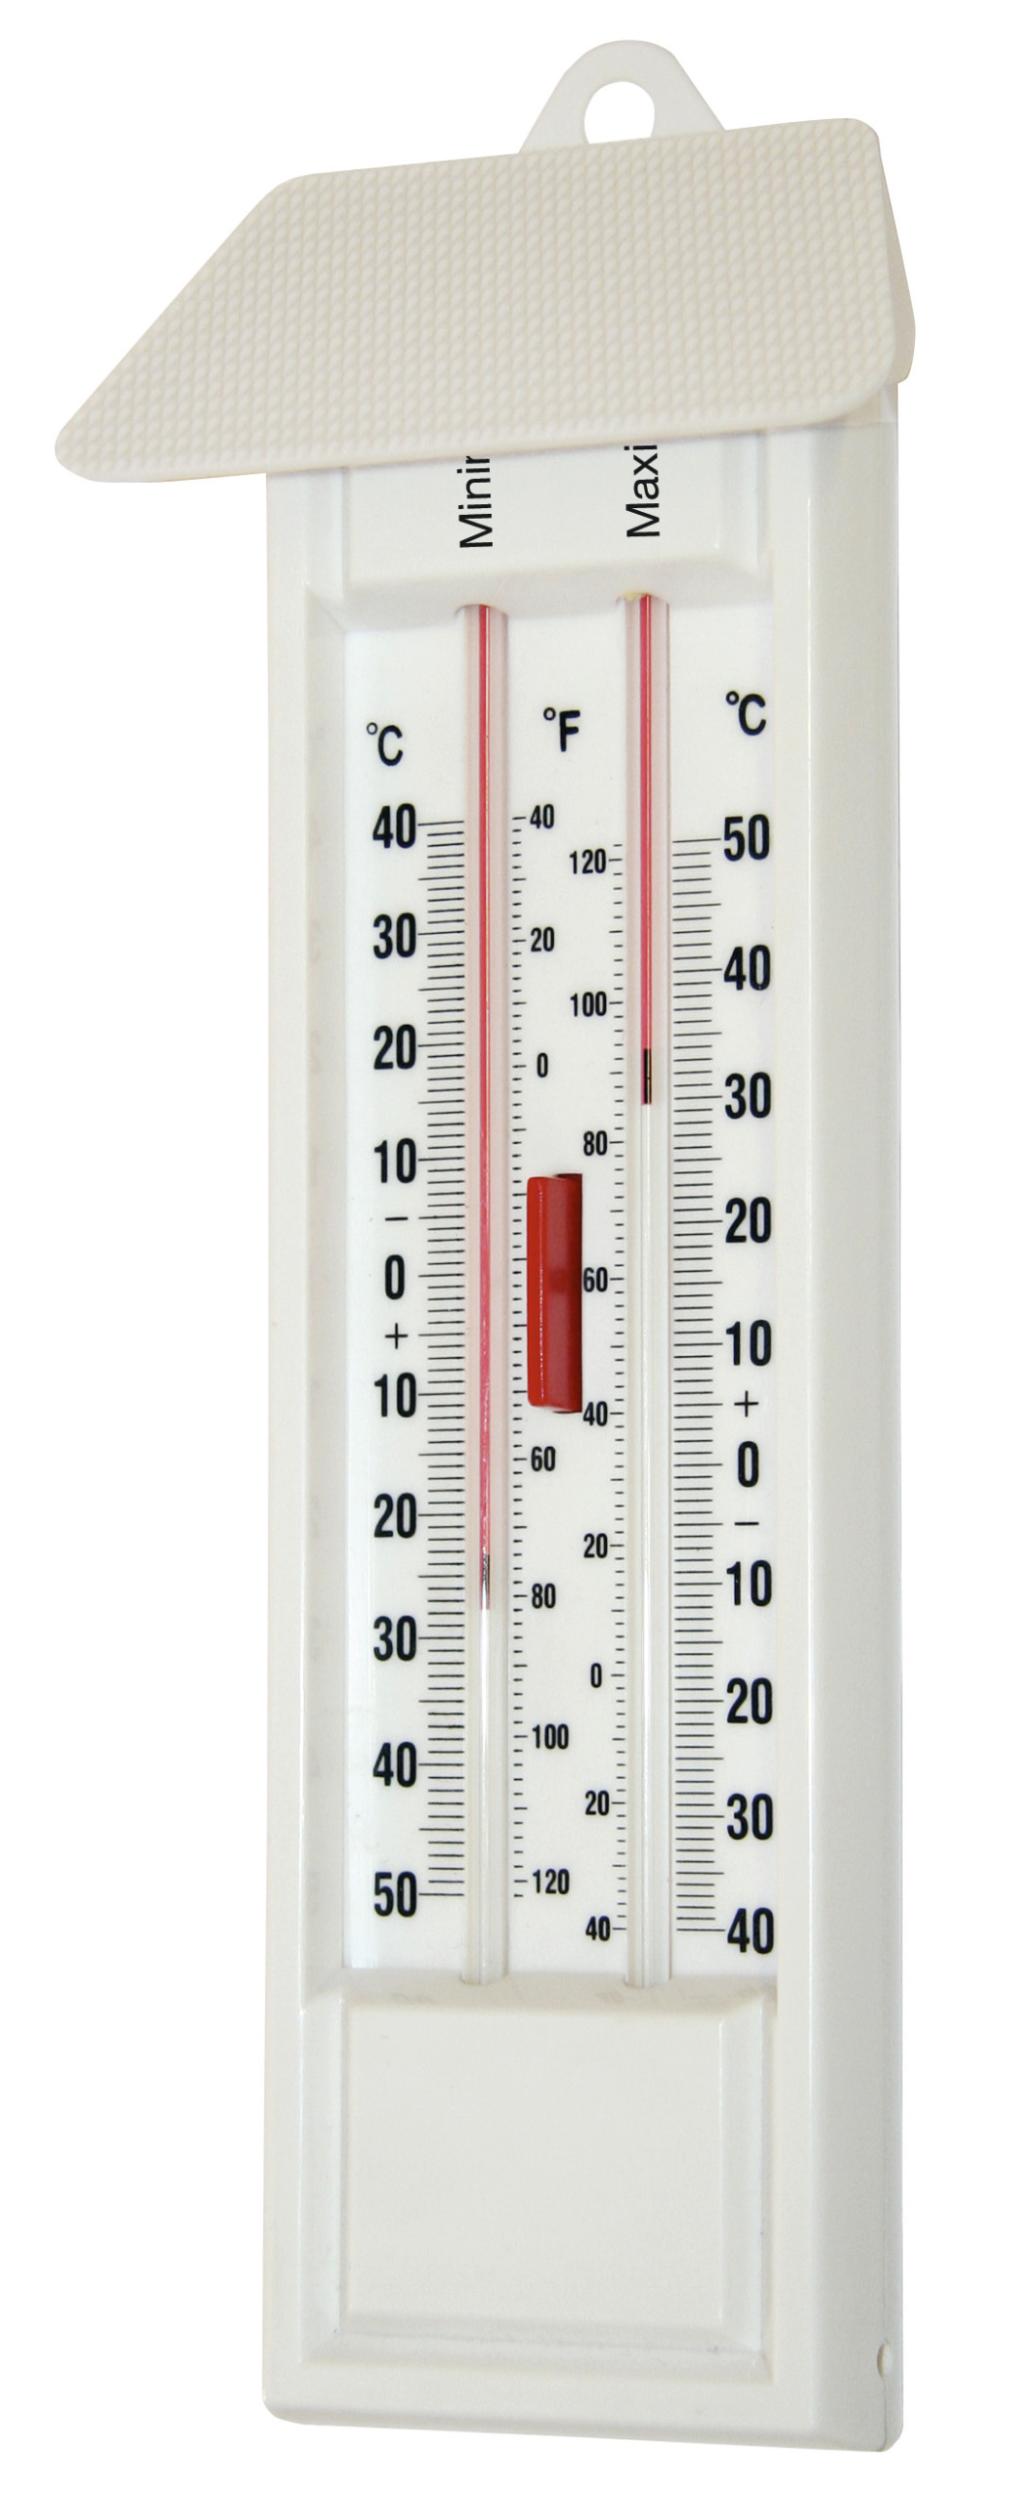 Kerbl Maximum-Minimum-Thermometer, quecksilberfrei